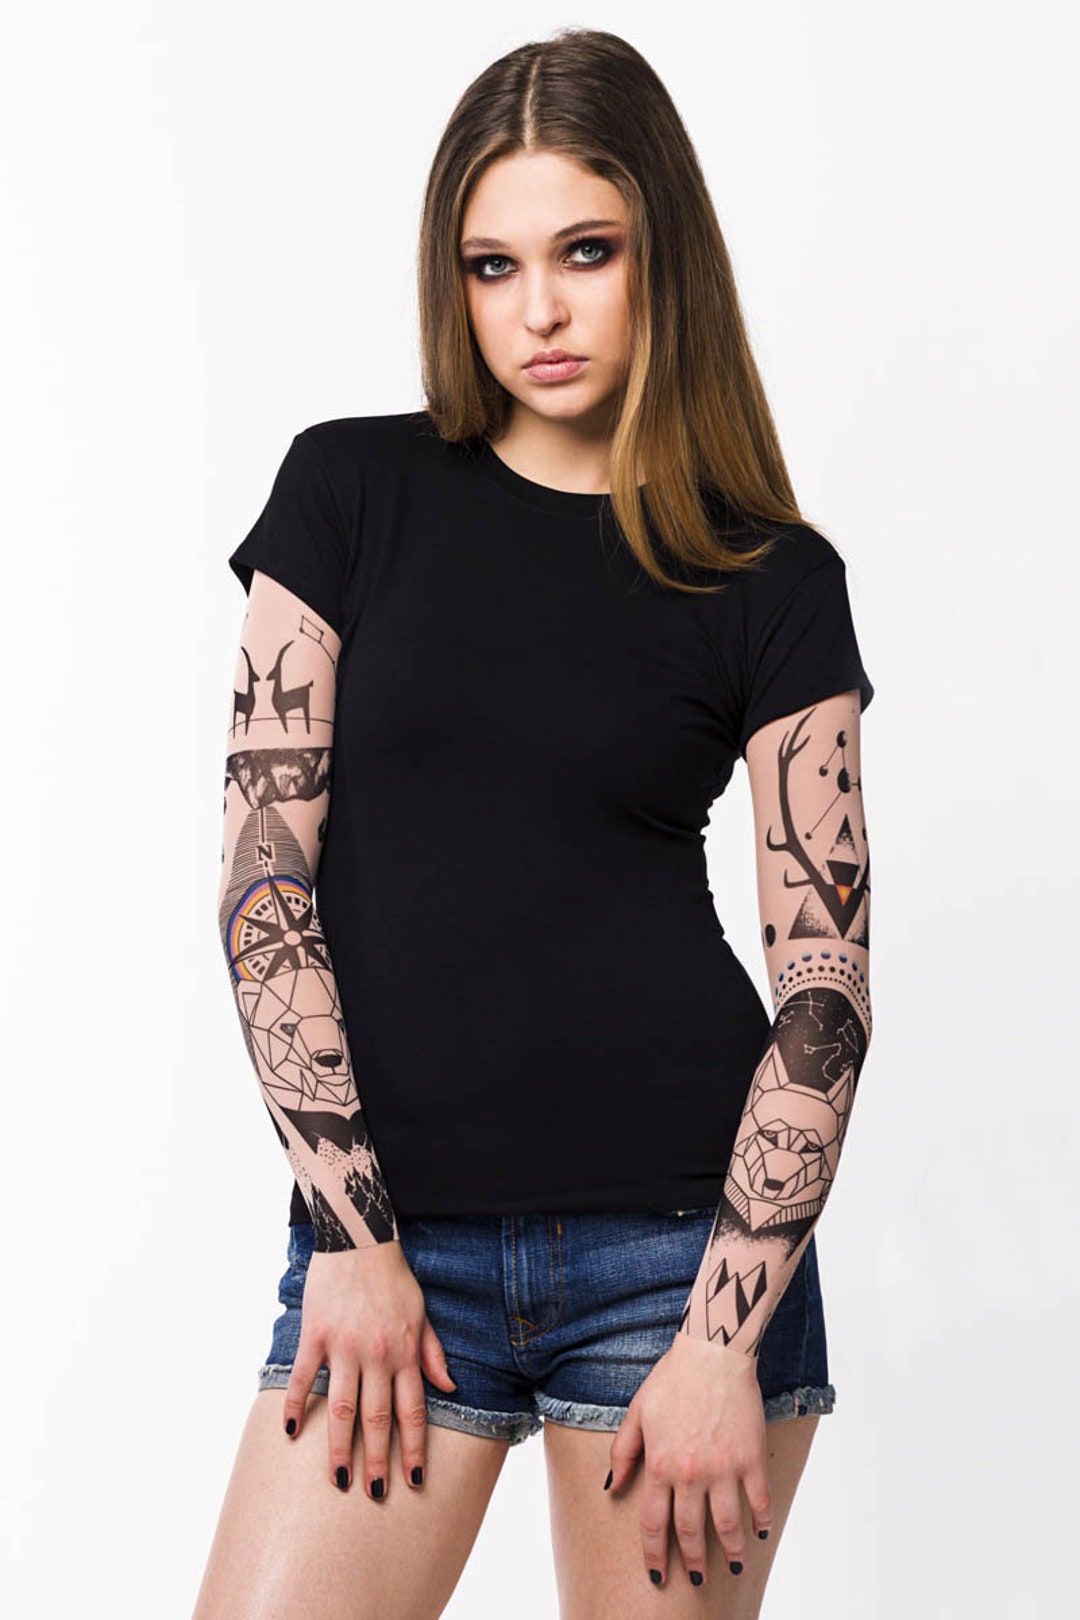 Tattoo clothing women